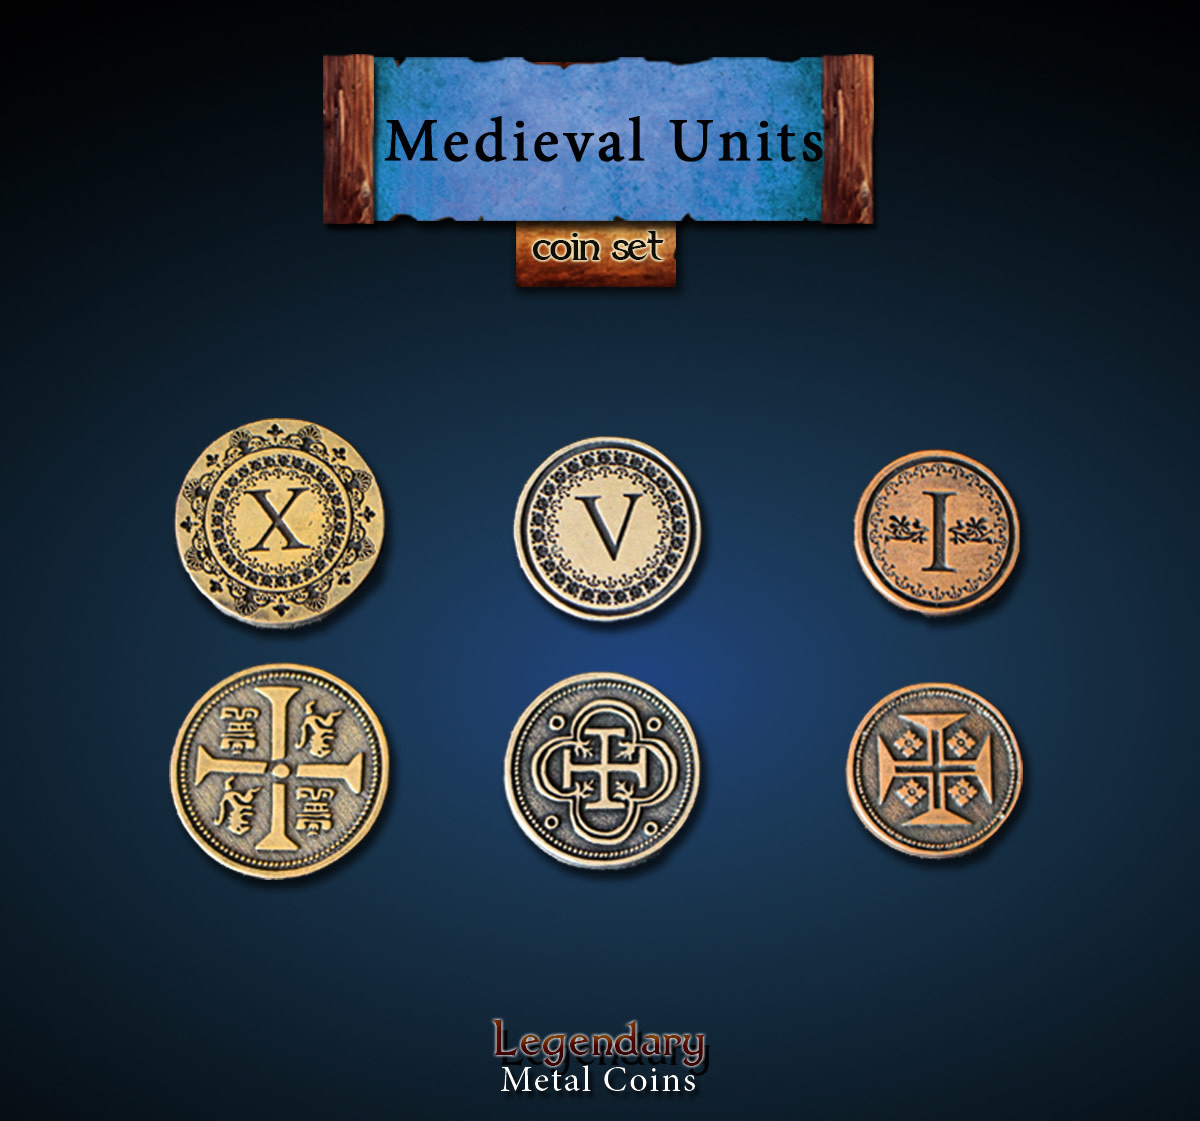 Legendary Metal Coins: Medieval Units (30pcs)